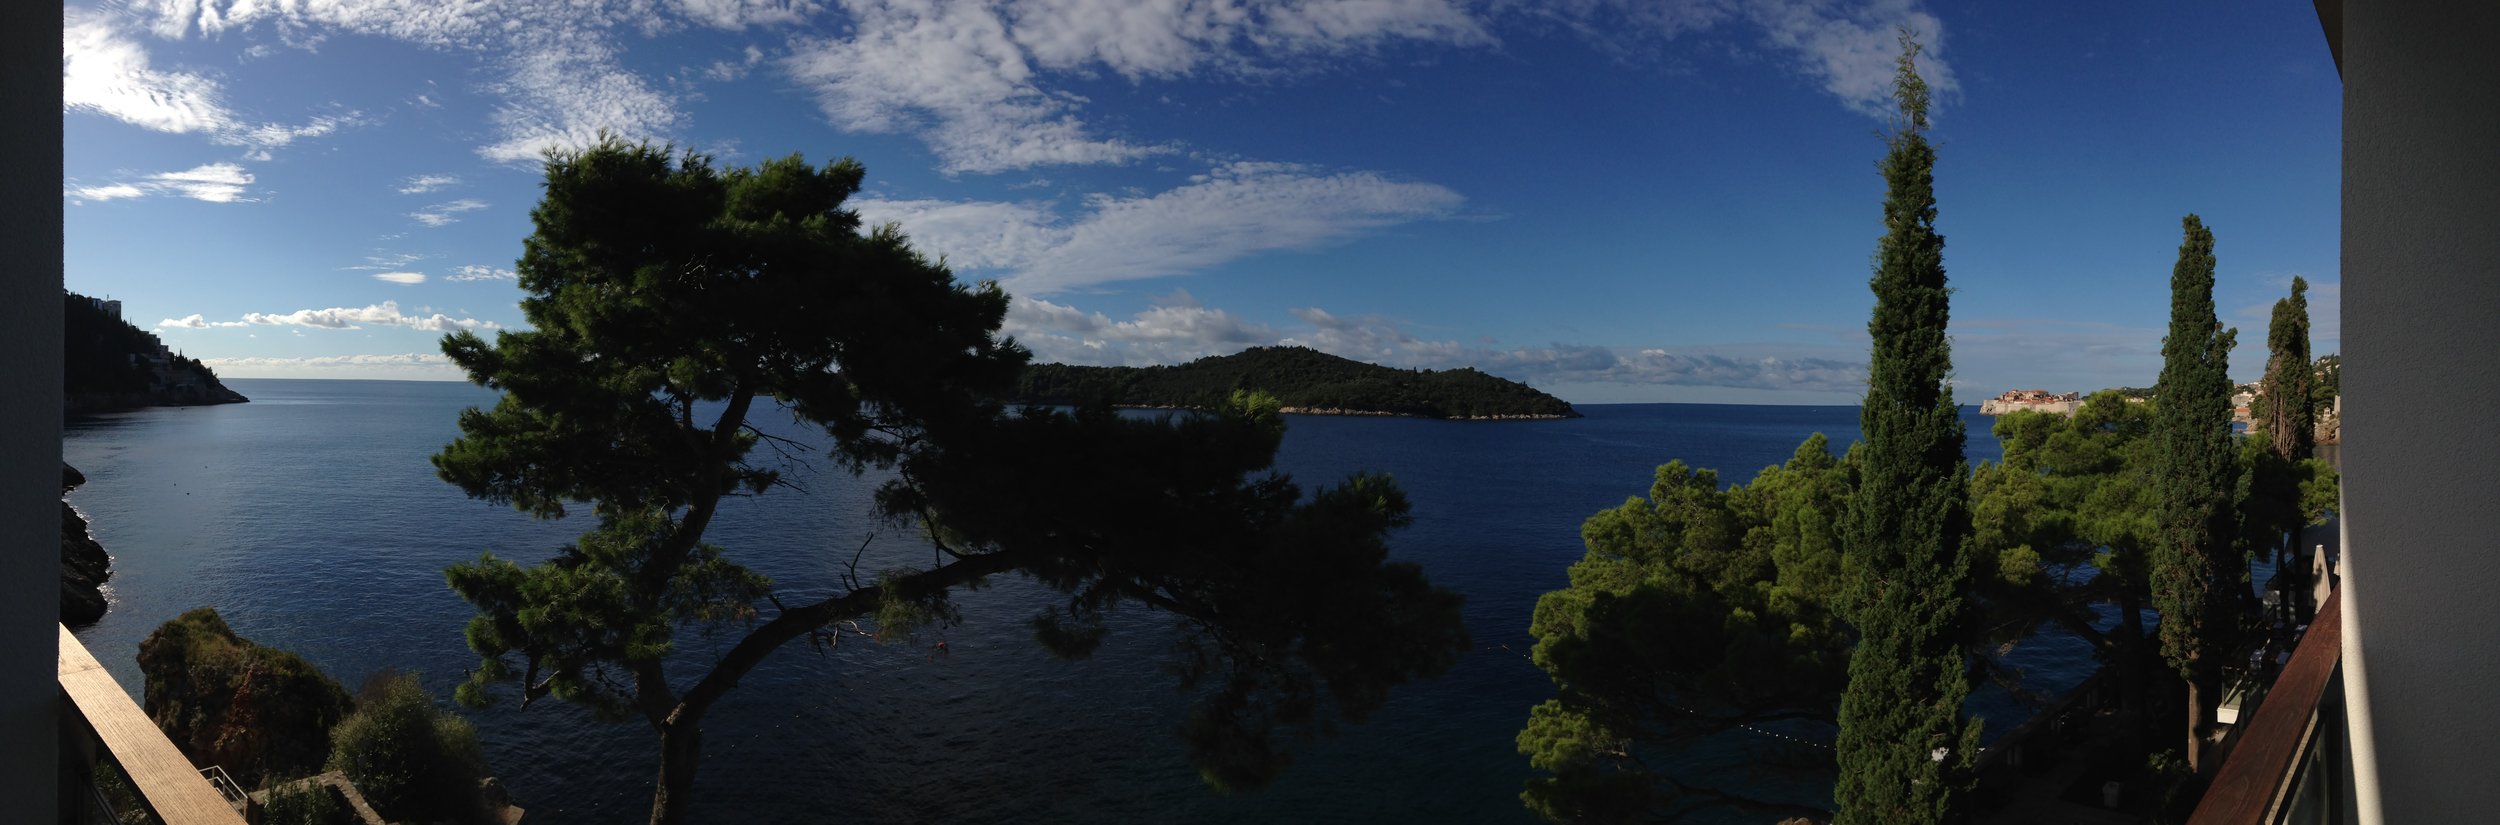 Distant Dubrovnik